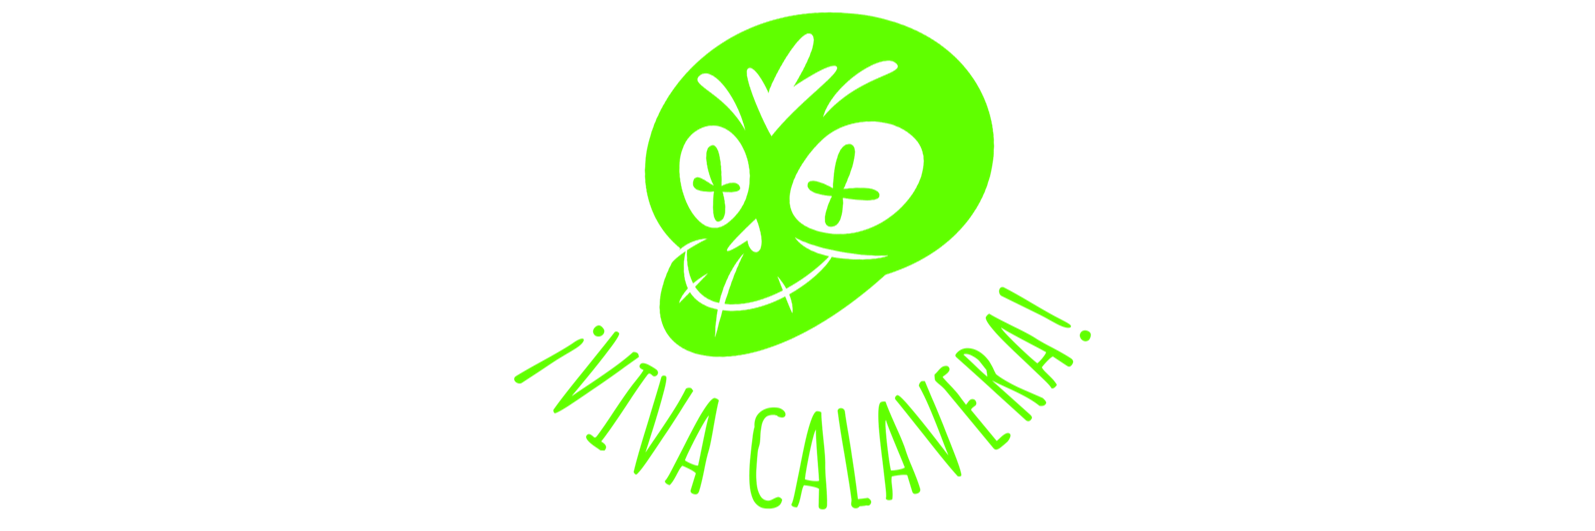 Viva Calavera